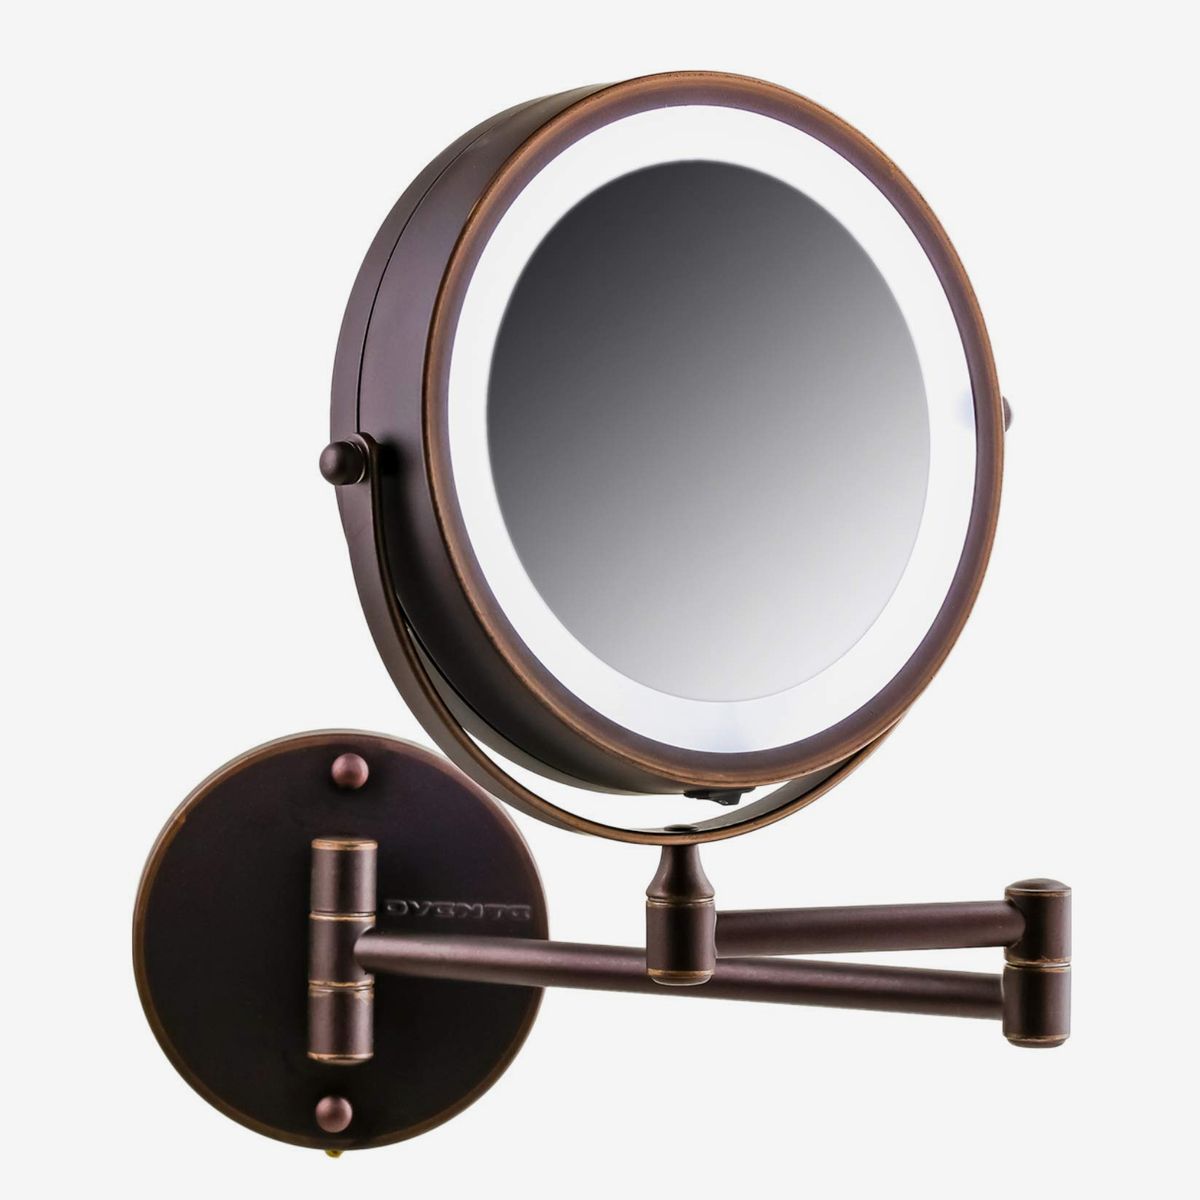 14 Best Lighted Makeup Mirrors 2021, Simplehuman Lighted Wall Mount Makeup Mirror